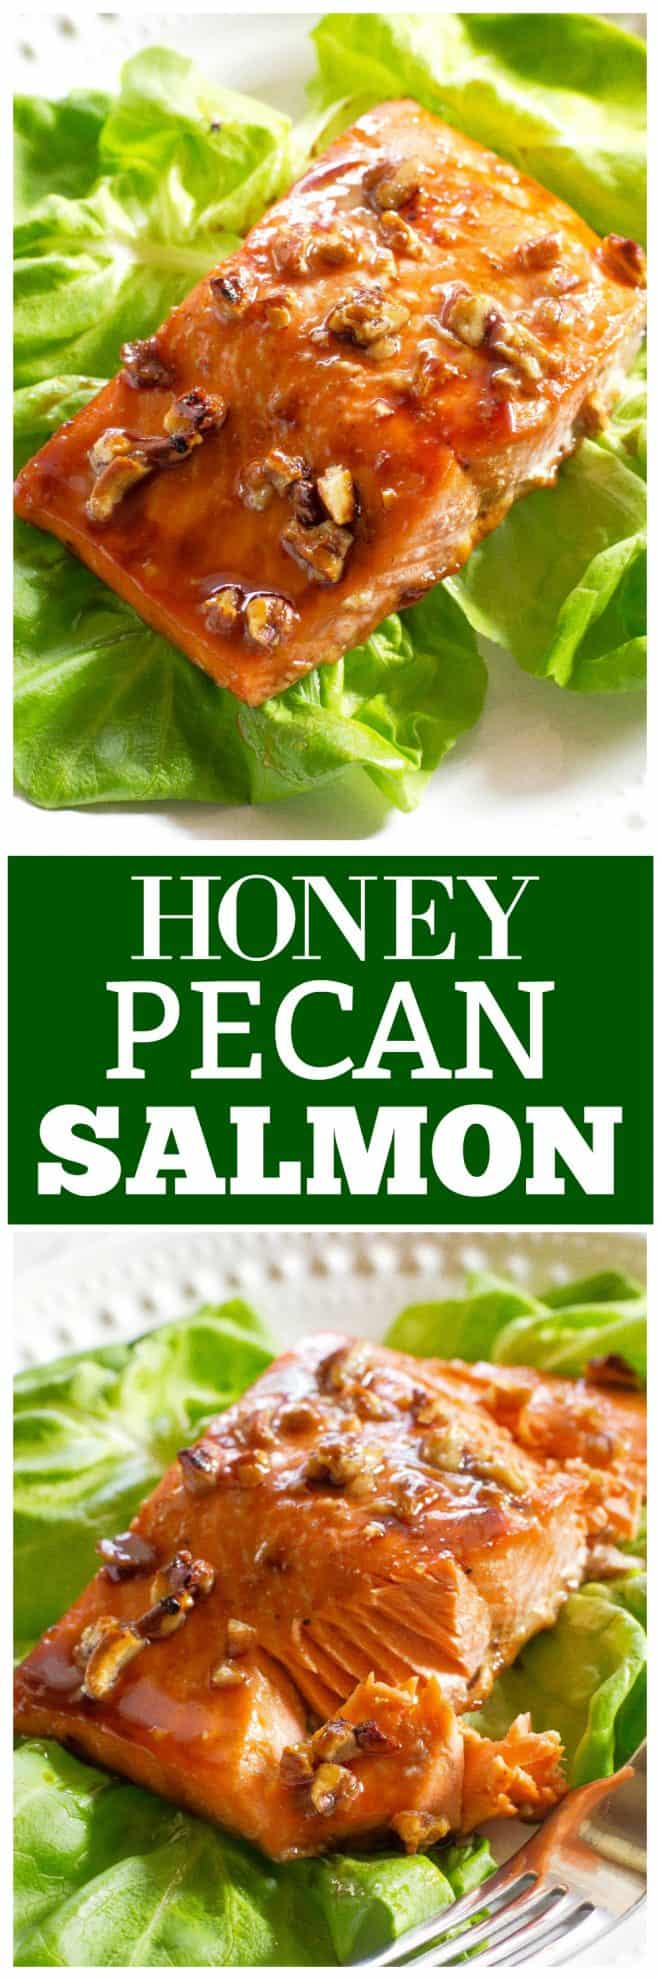 fb image - Honey and Pecan-Glazed Salmon